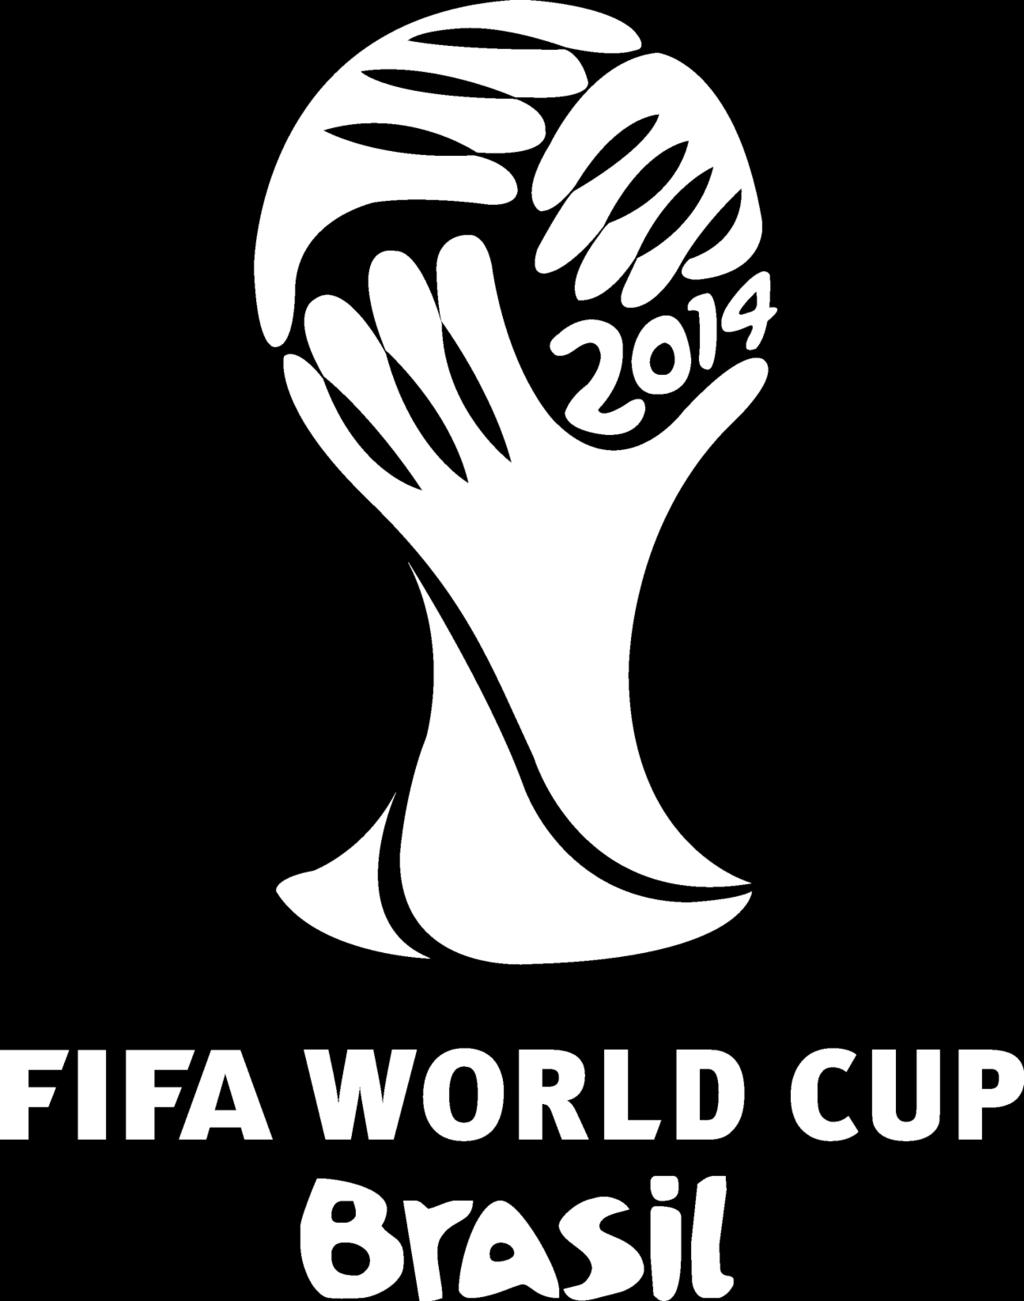 Copa do Mundo 2014